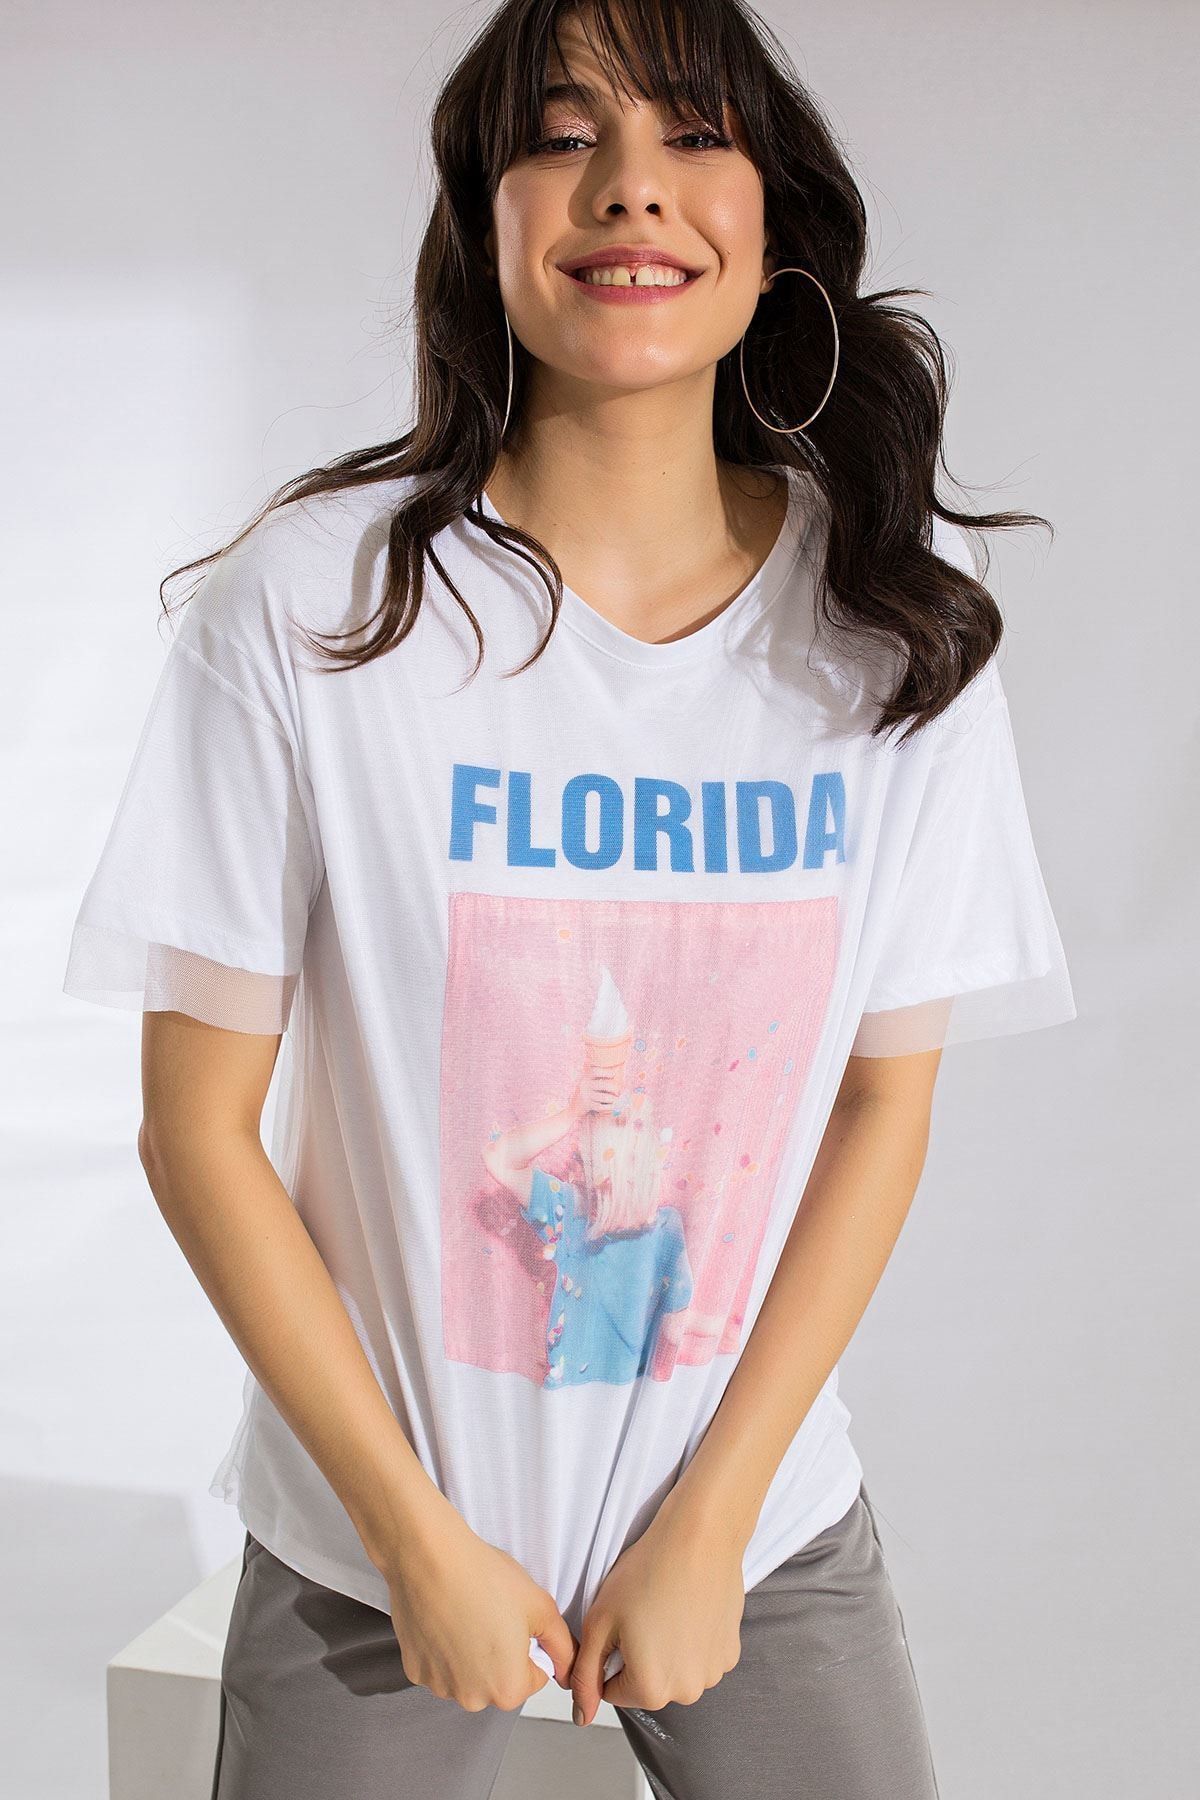 Mispacoz Kadın FLORIDA Sloganlı Kol Uçları Tül Tişört - Beyaz MP9Y-TSH0071